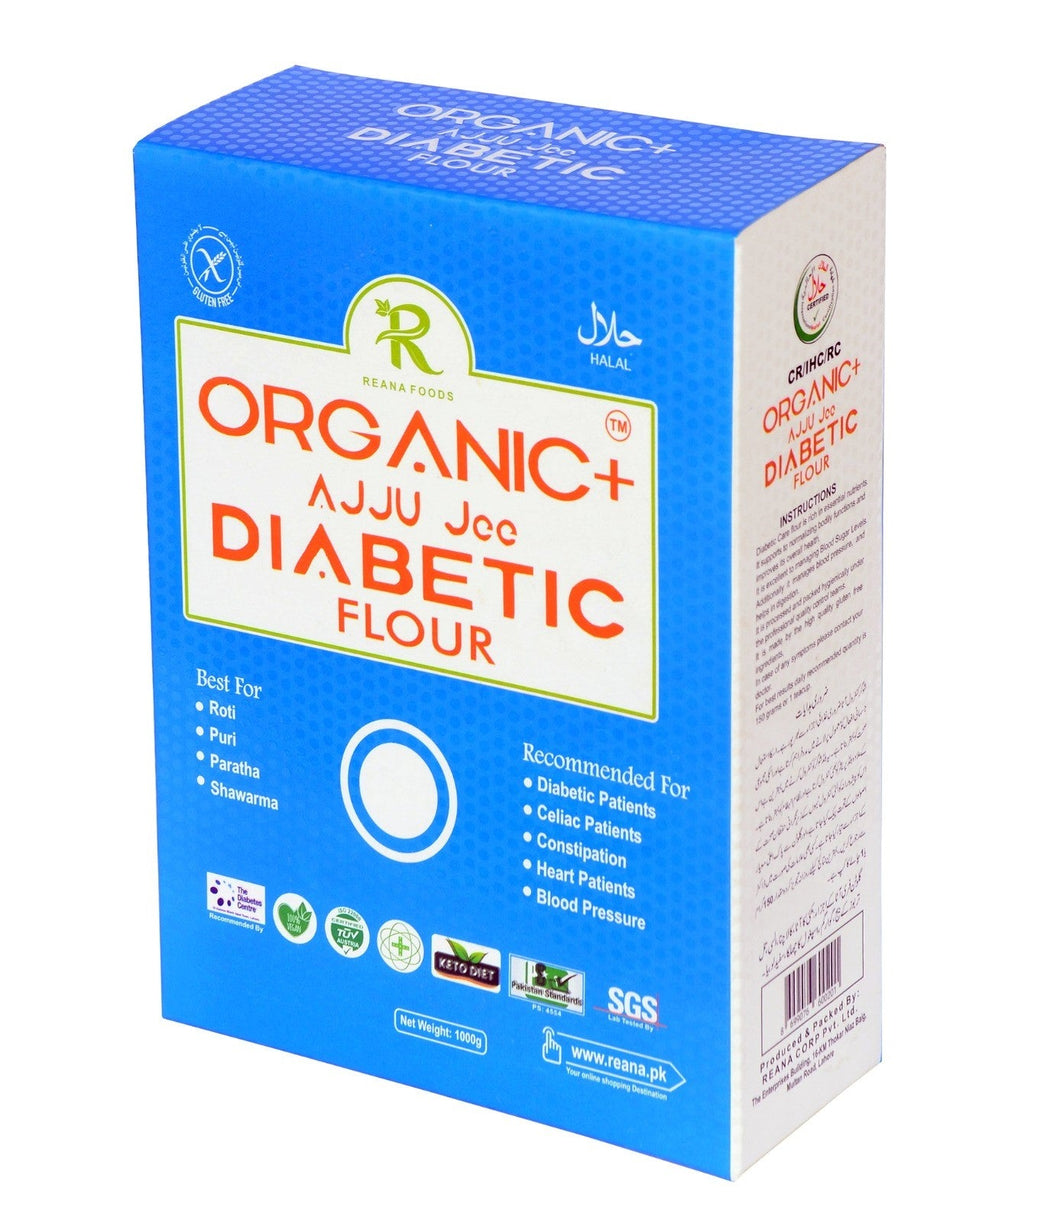 Organic Gluten Free Diabetic Flour 1000g - TAYYIB - Reana Foods - Lahore